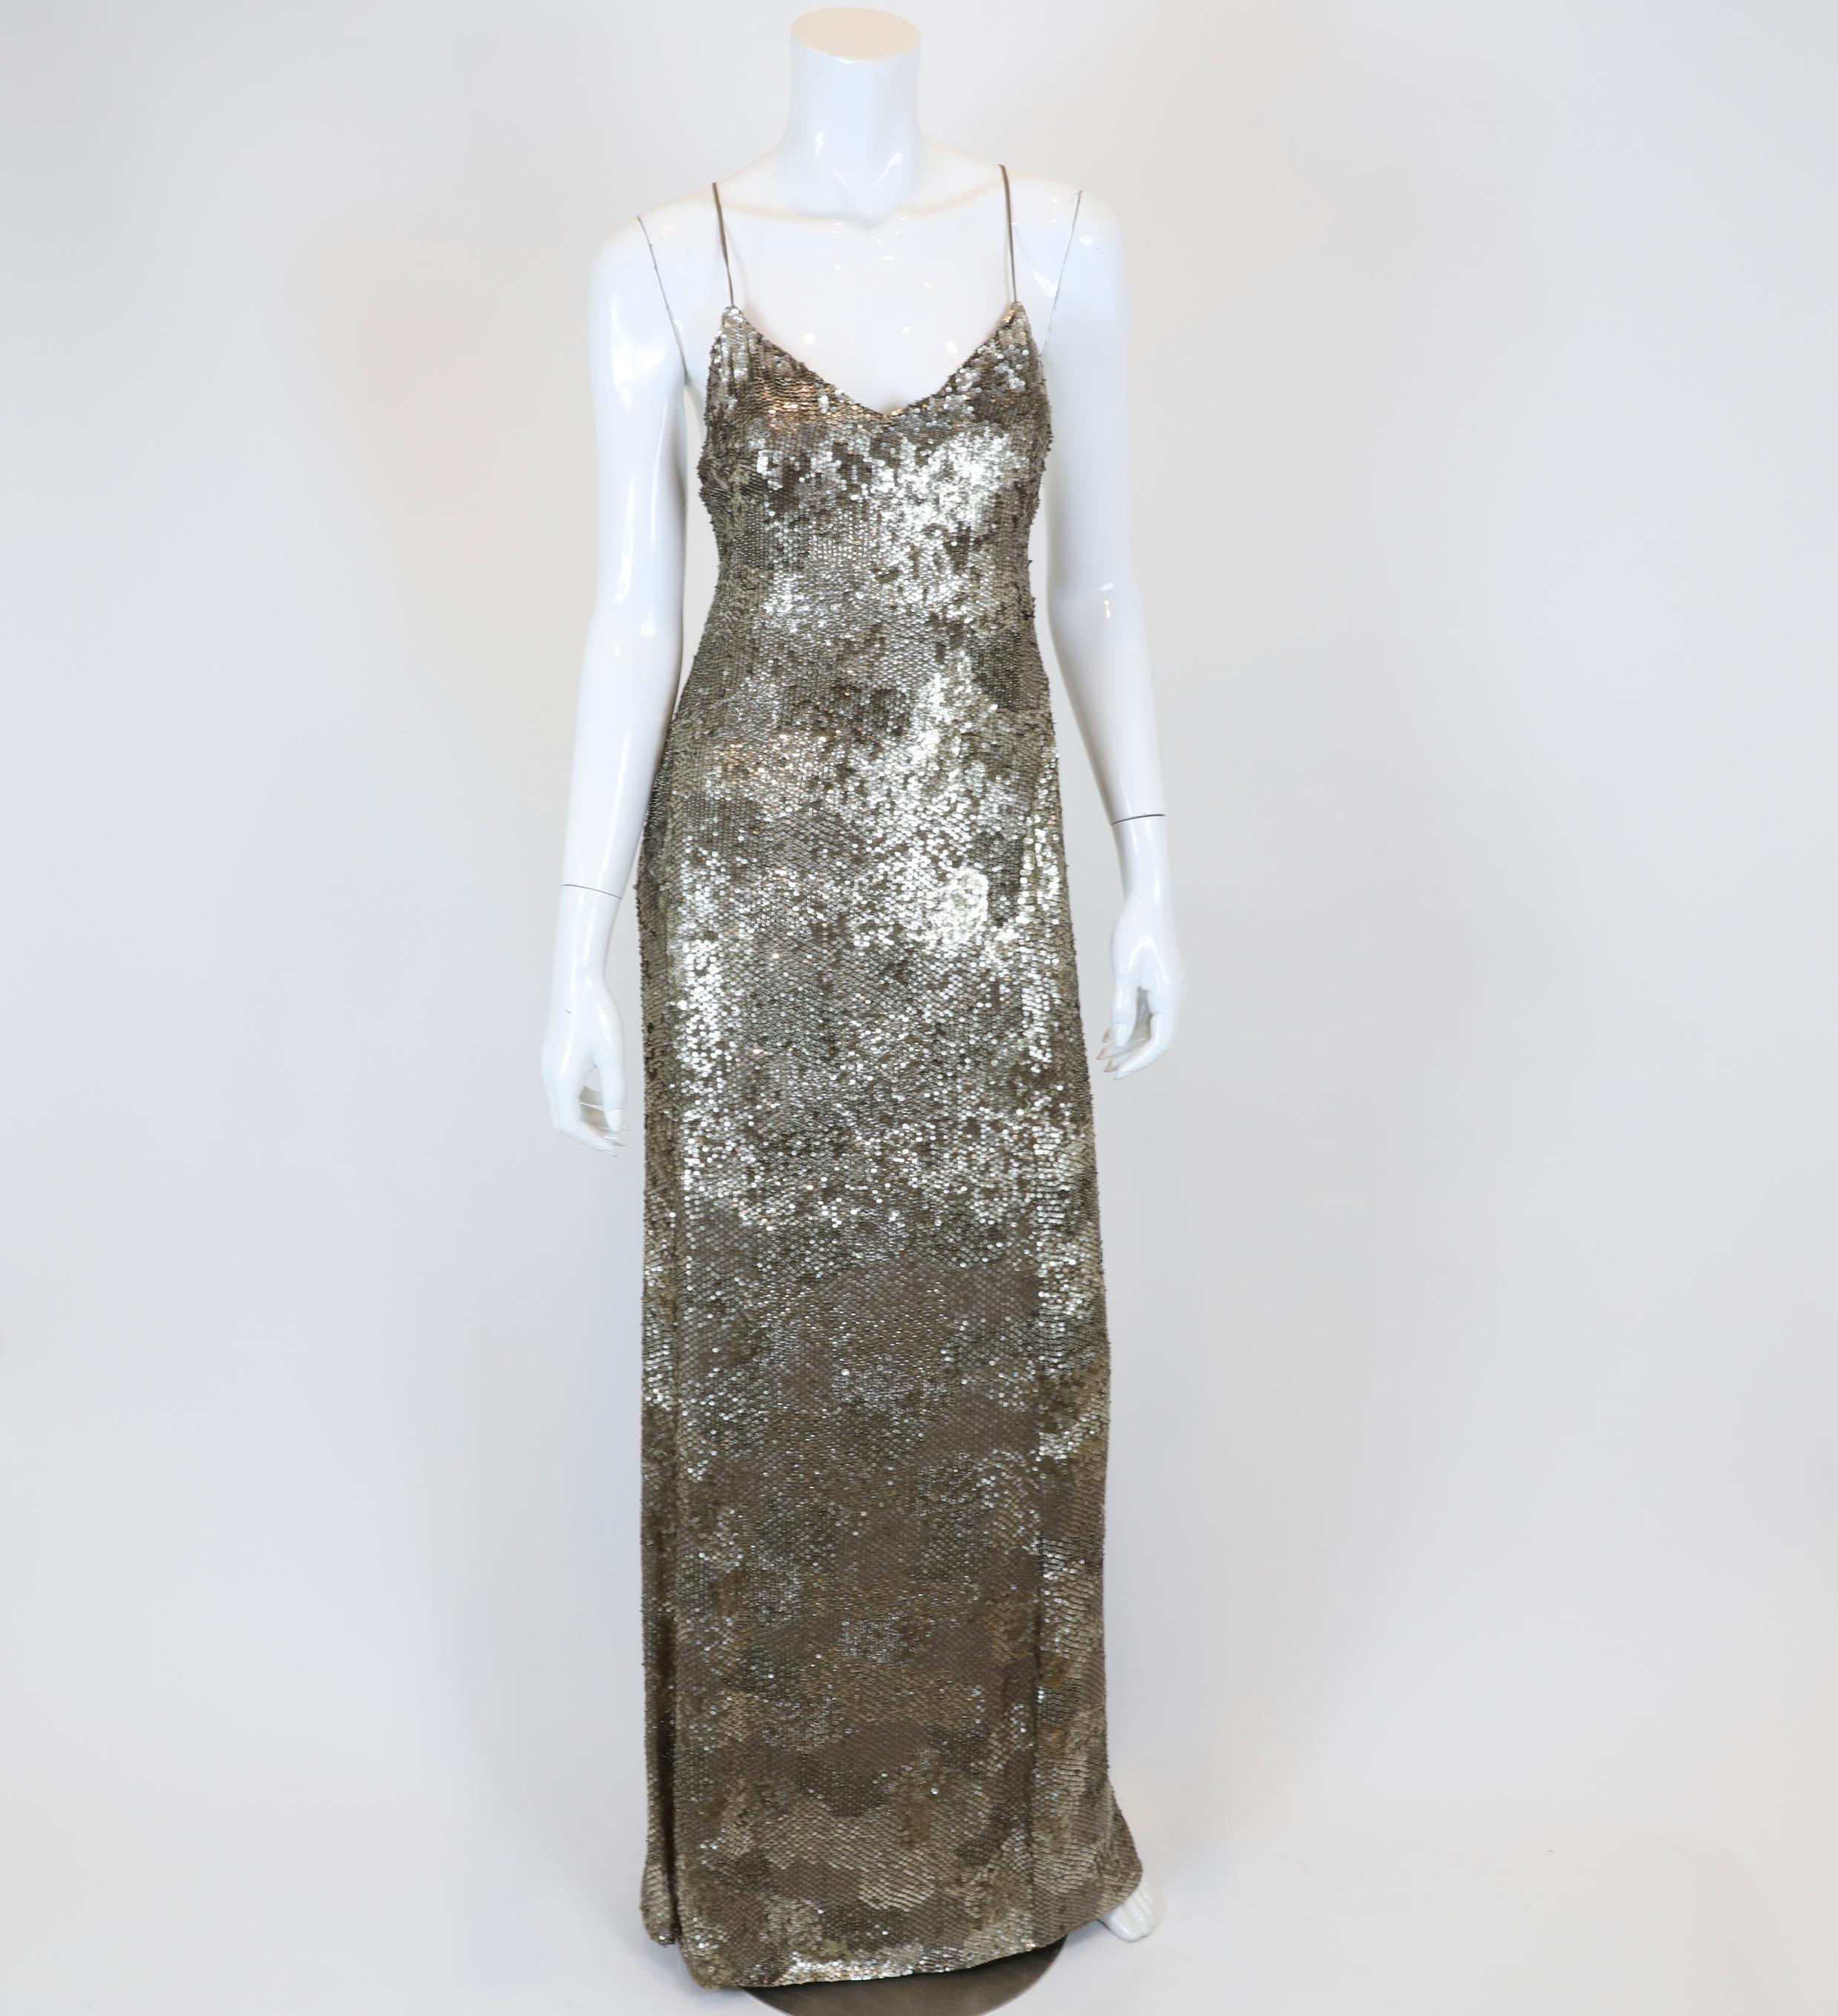 Women's Ralph Lauren Collection Size 2 Gold Dress
Spaghetti strap sequin gown
